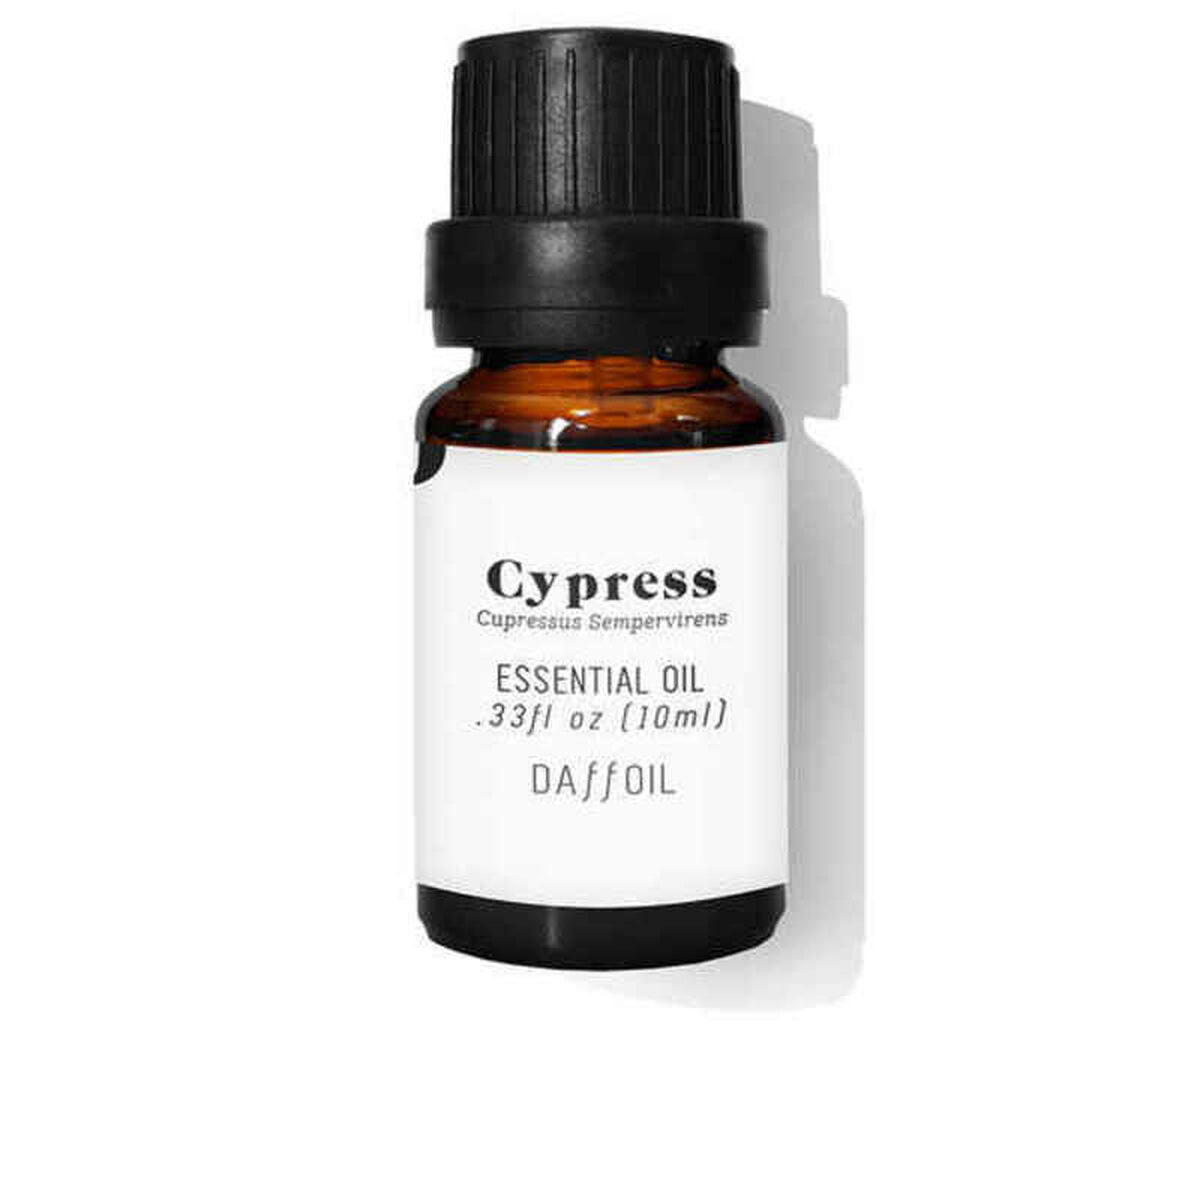 Olio essenziale cypress da daffail 10 ml